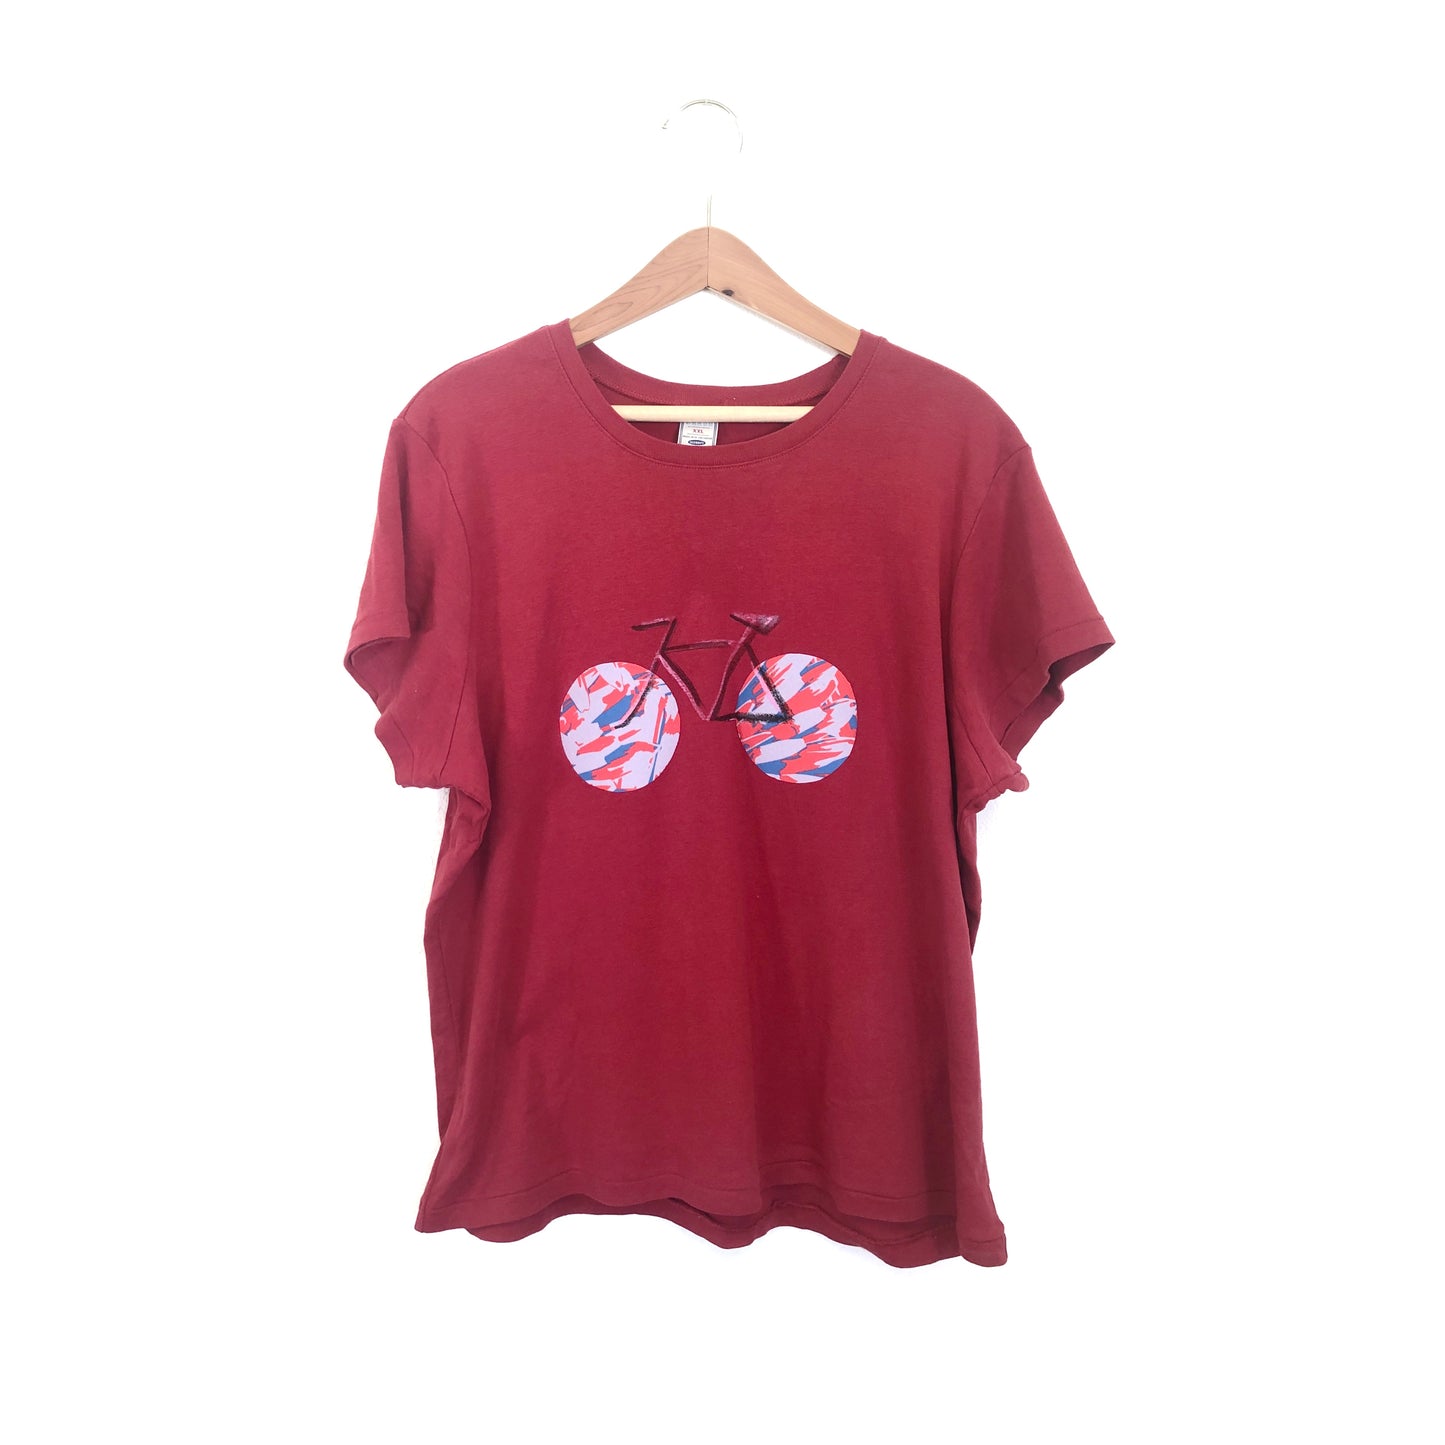 Appliqué Shirt - Red - Size XL